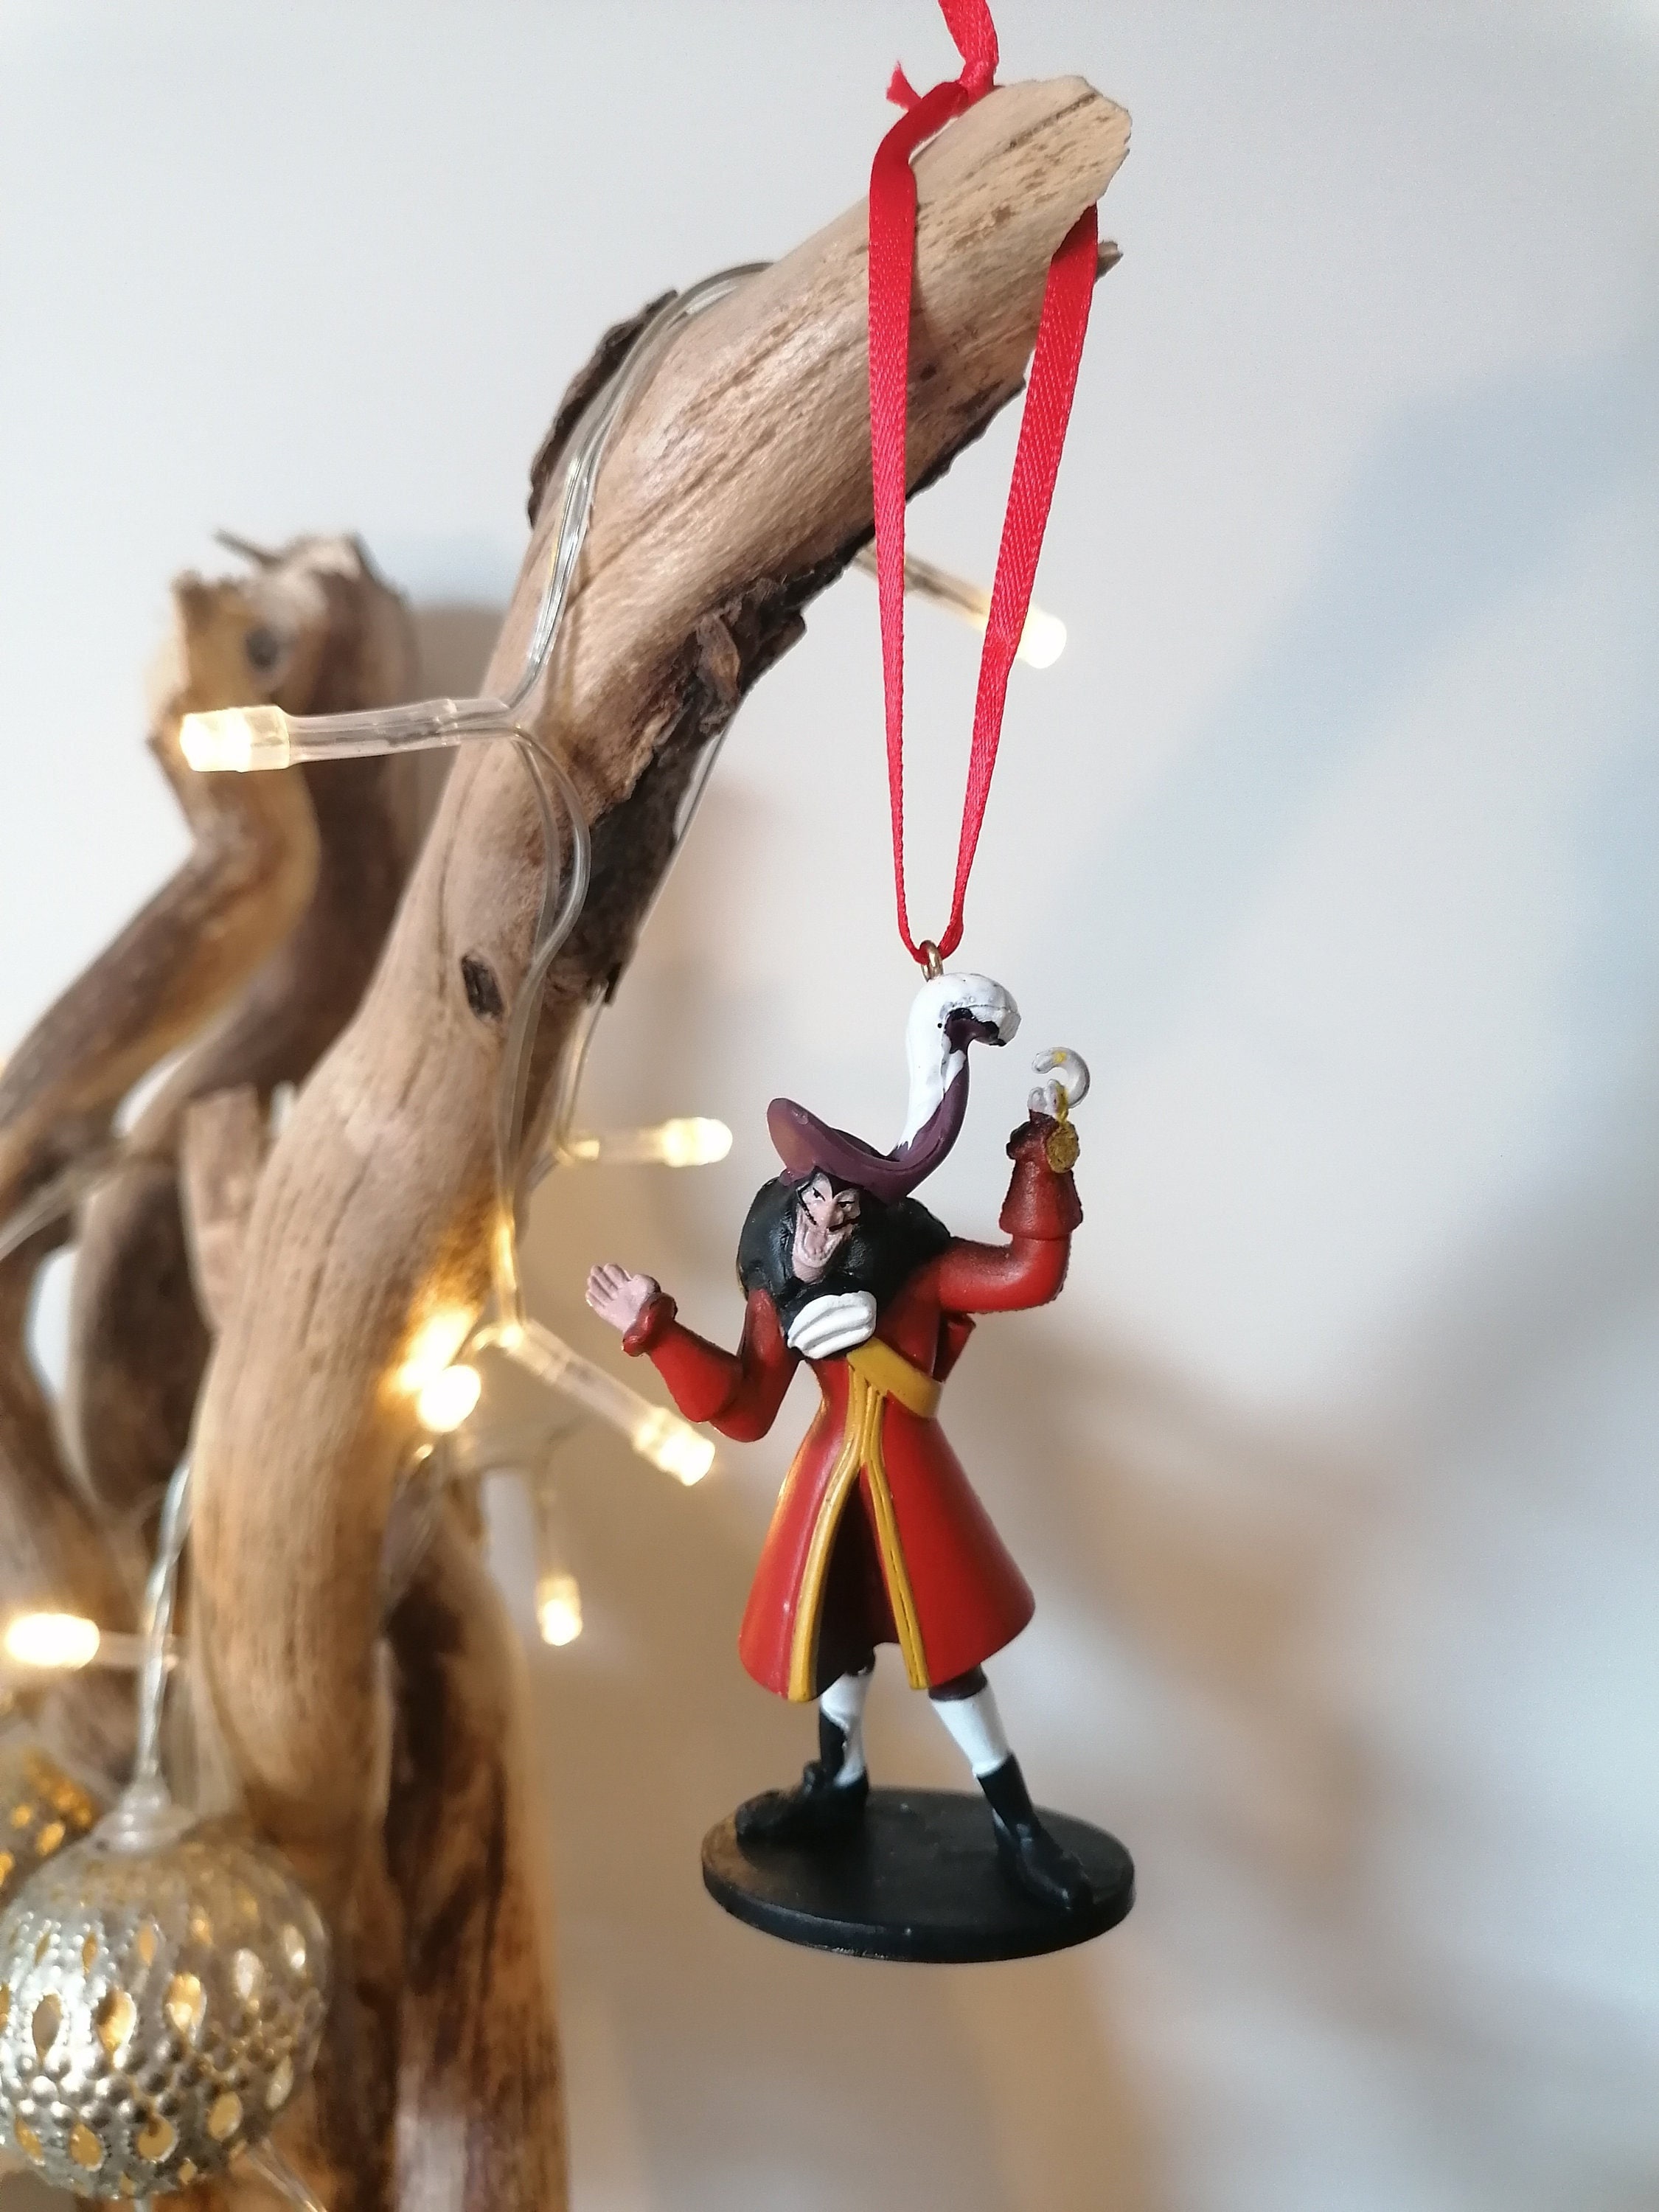 Disney Peter Pan Captain Hook Christmas Decoration Figure, Hanging